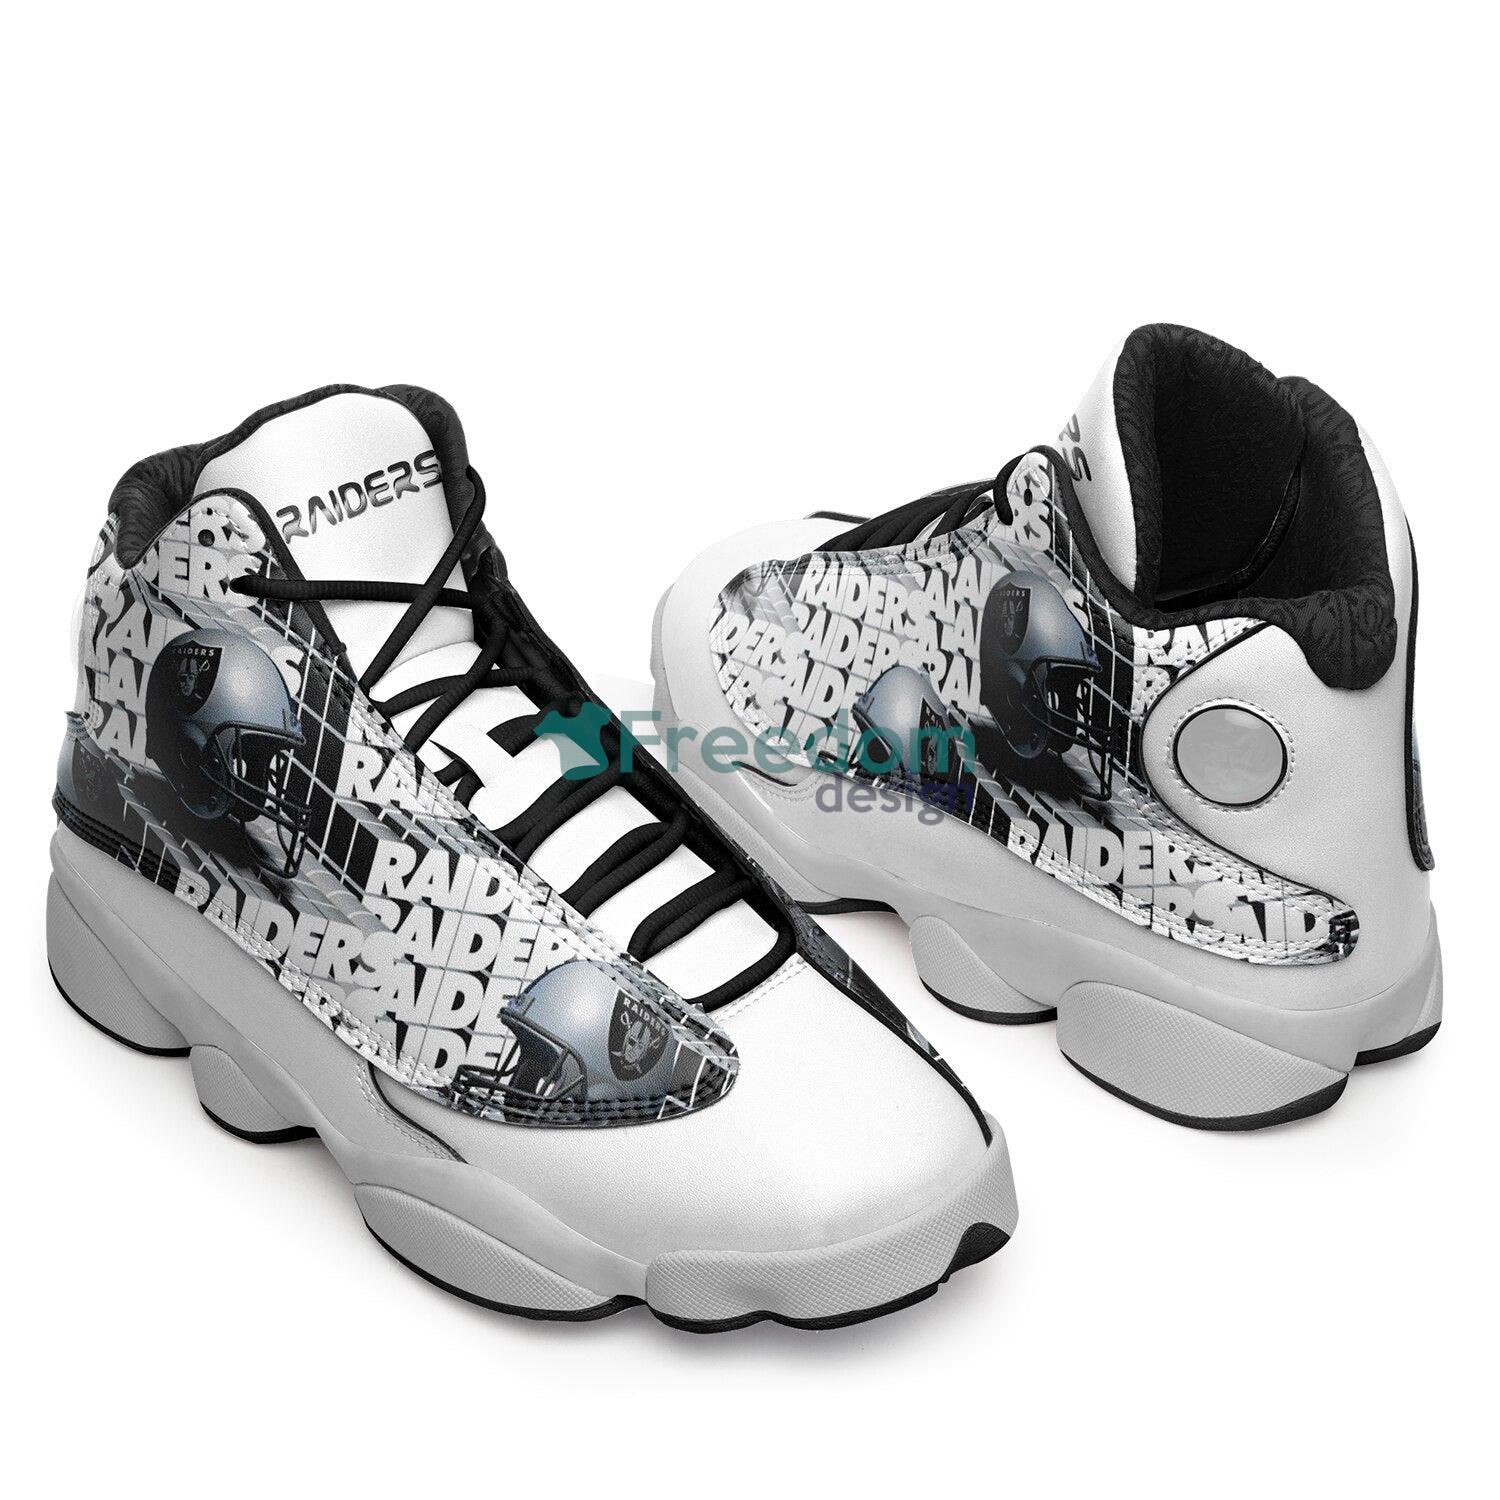 Los Angeles Chargers Fans Air Jordan 13 Sneaker Shoes For Fans